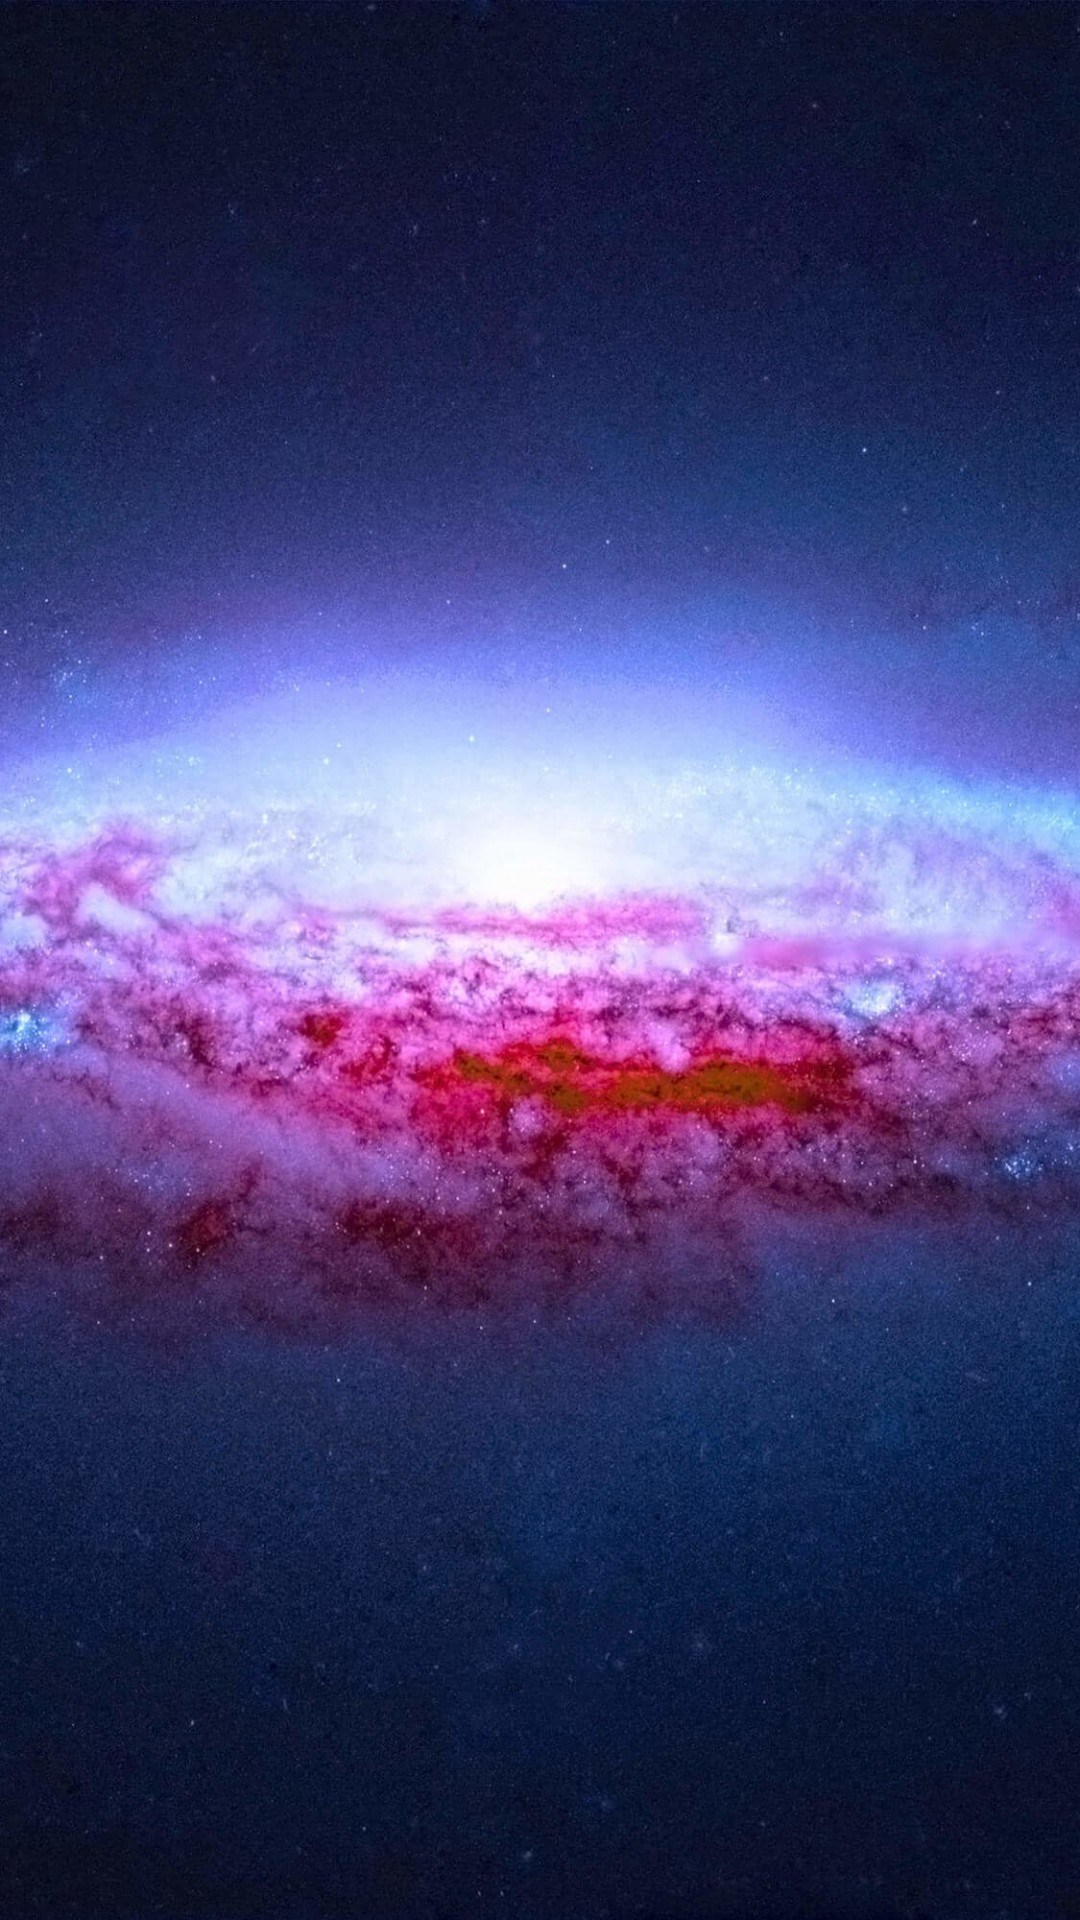 NGC 2683 Spiral Galaxy Wallpaper for SAMSUNG Galaxy Note 3